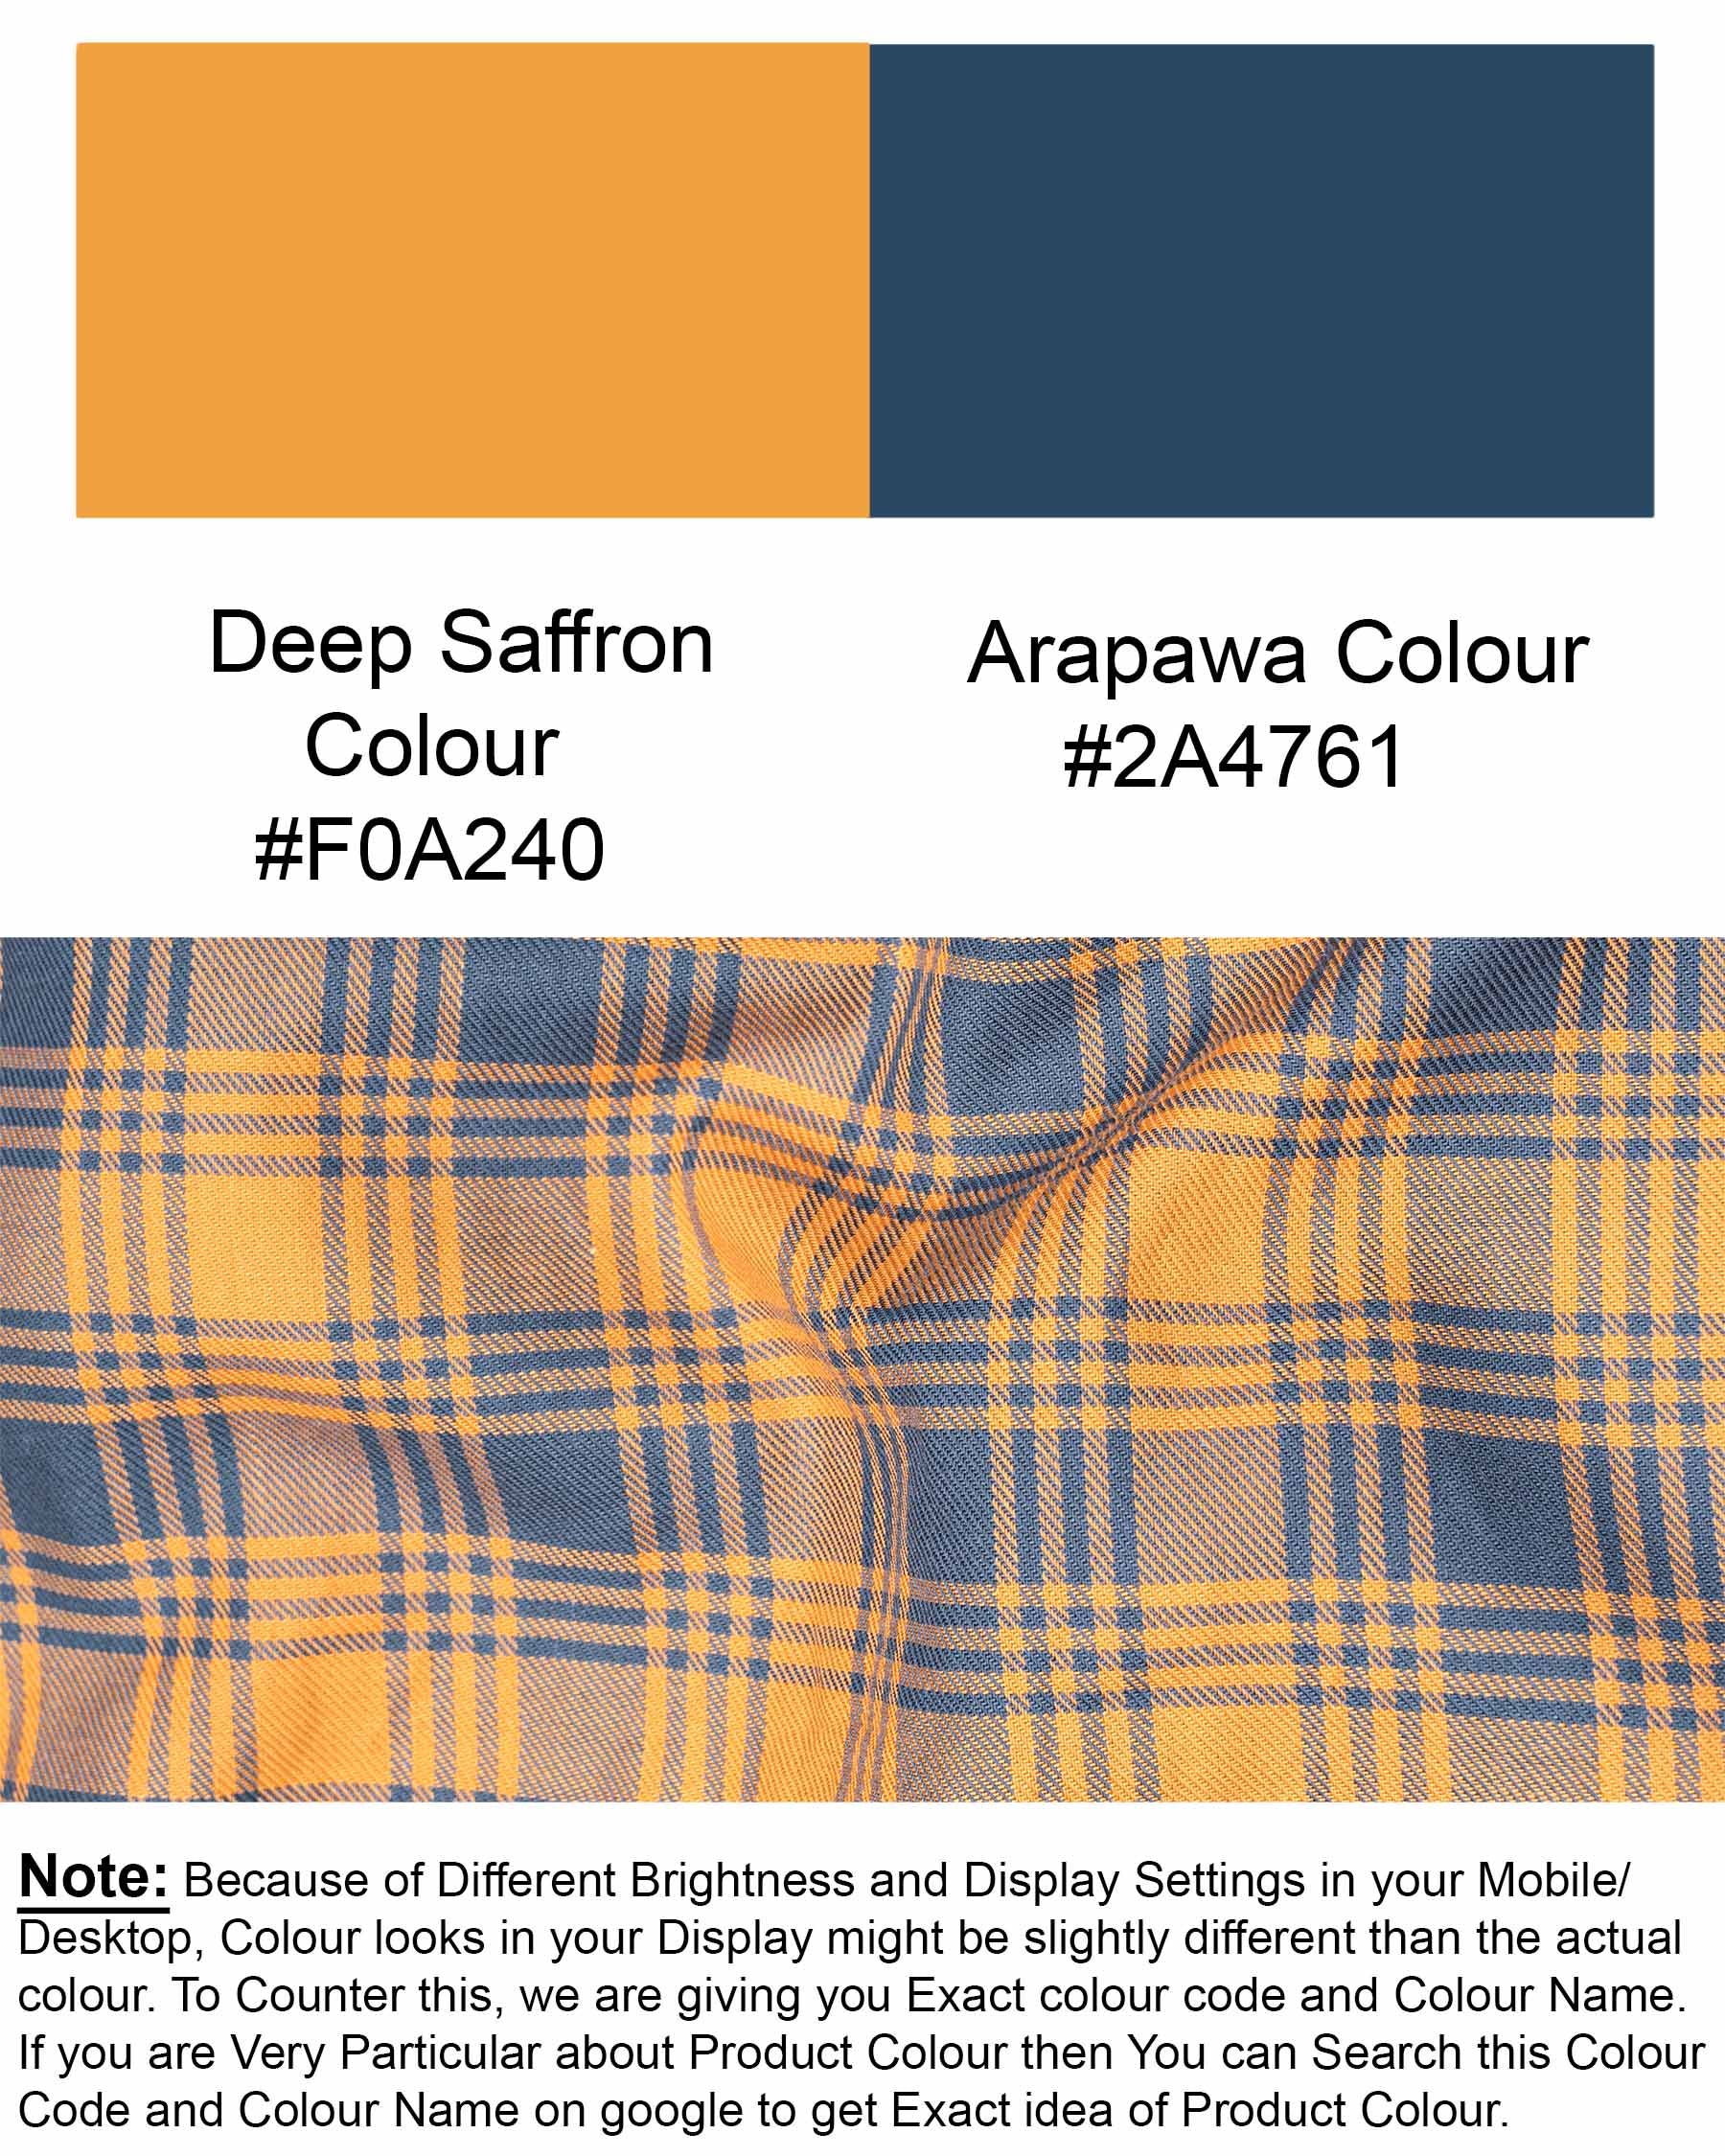 Deep Saffron and Arapawa Twill Plaid Premium Cotton Shirt